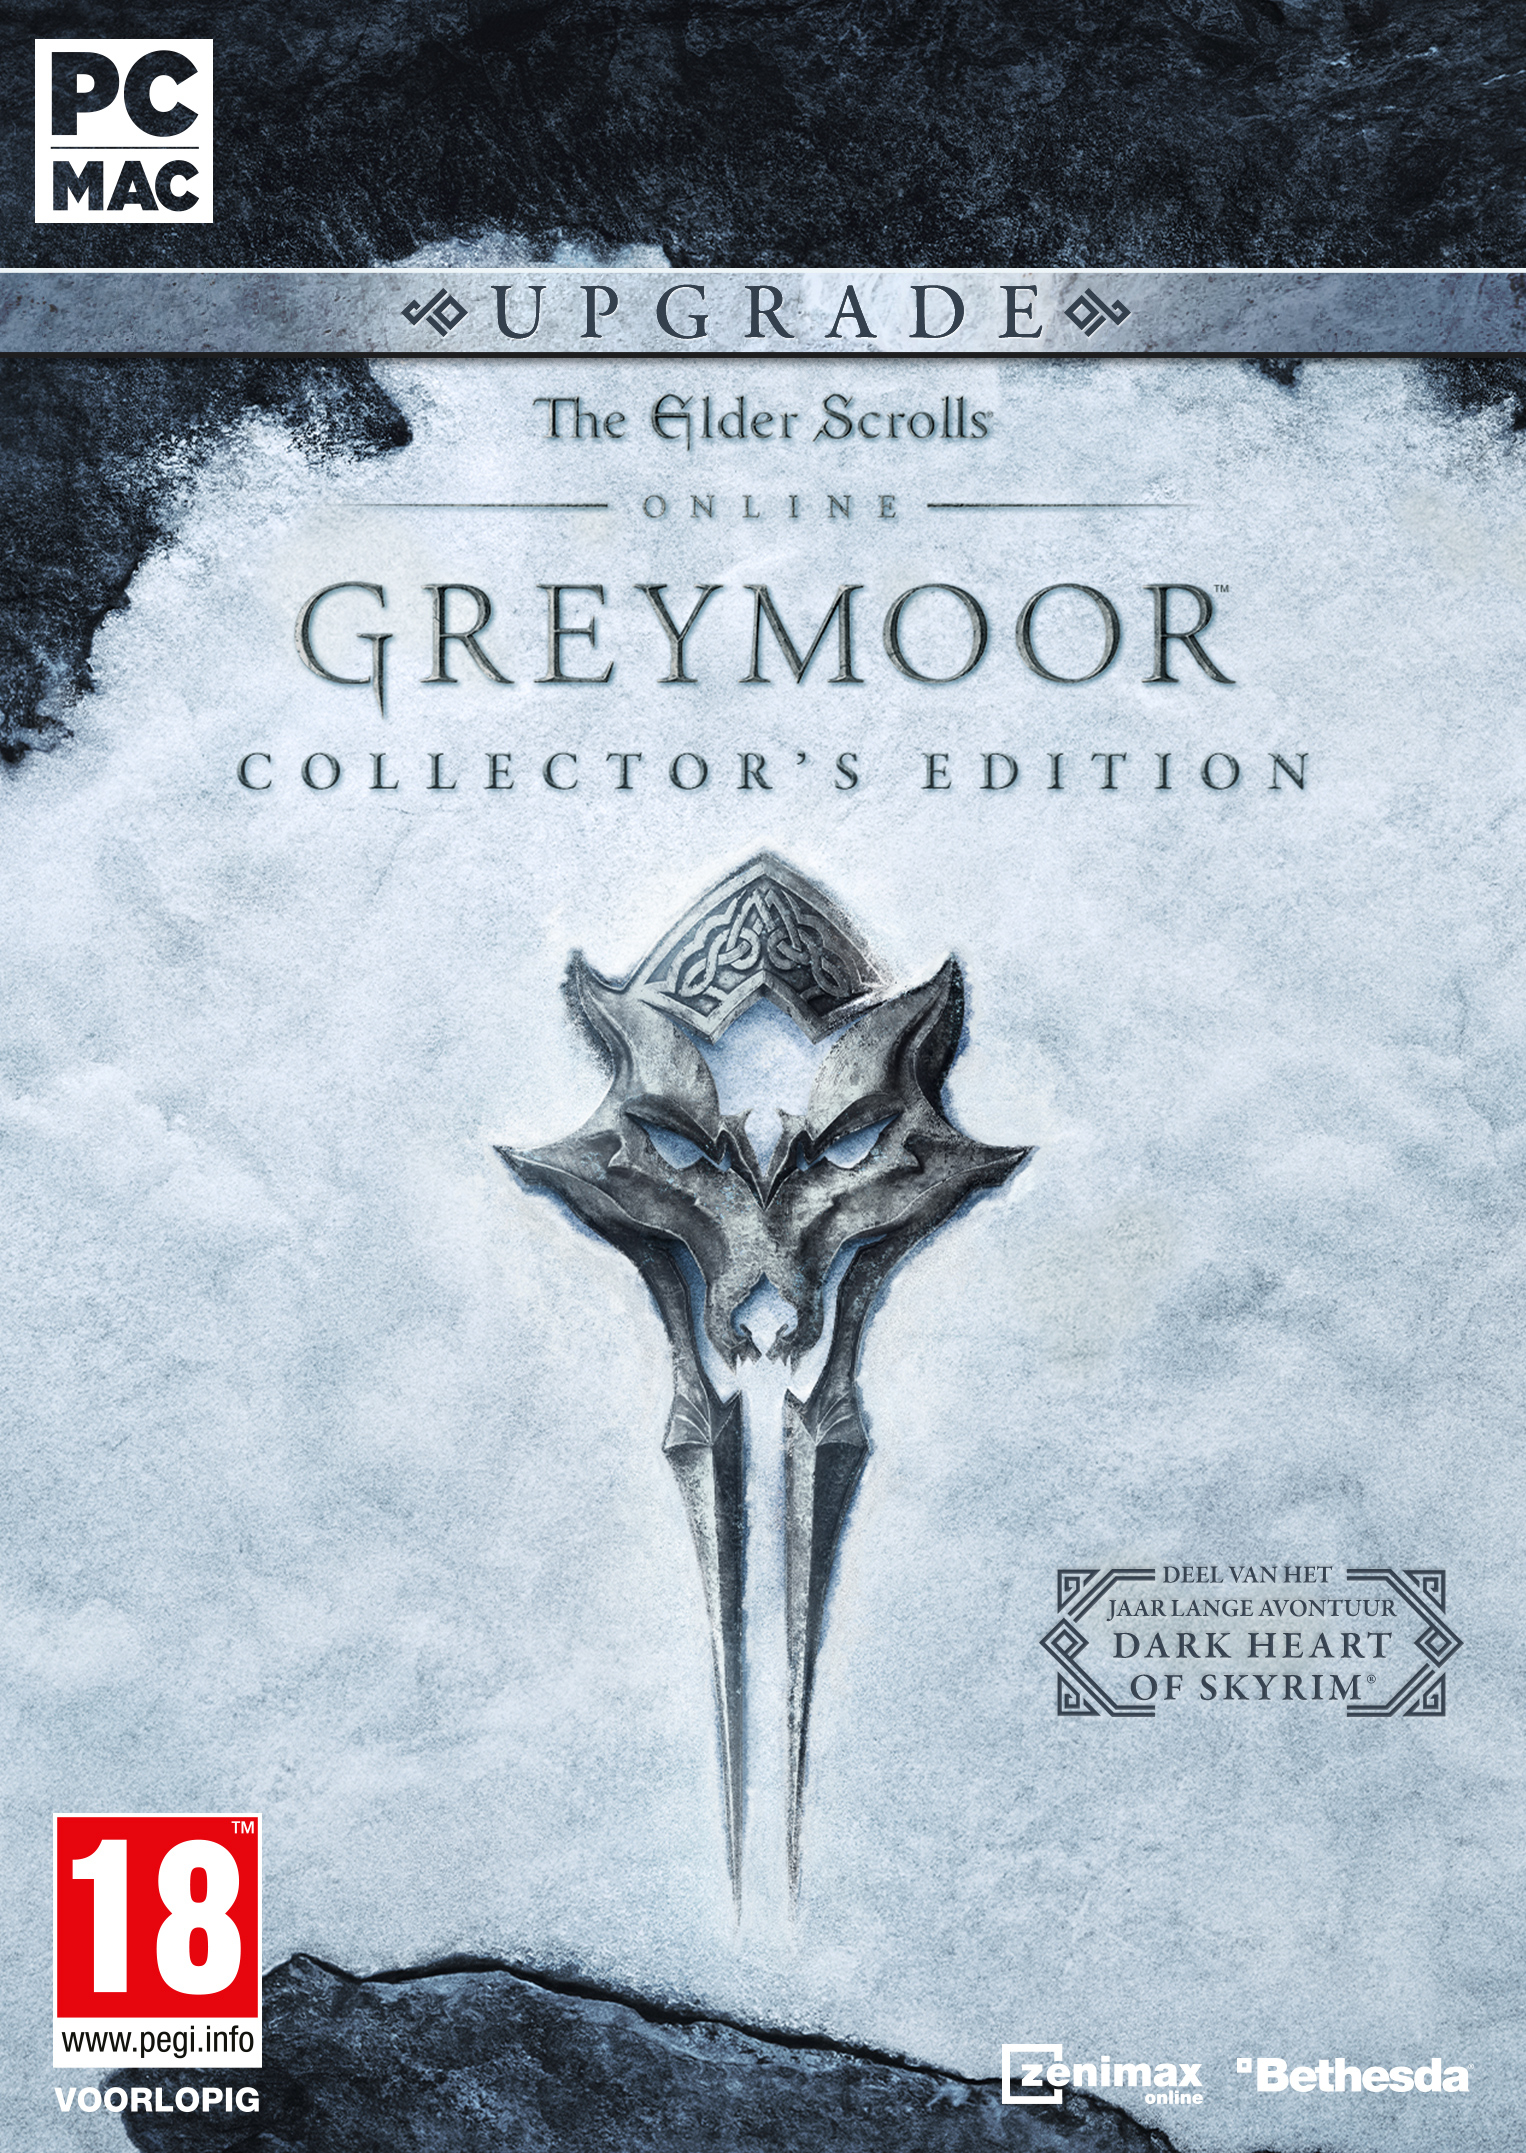 The Elder Scrolls Online: Greymoor - Collector's Edition Upgrade - PC Game